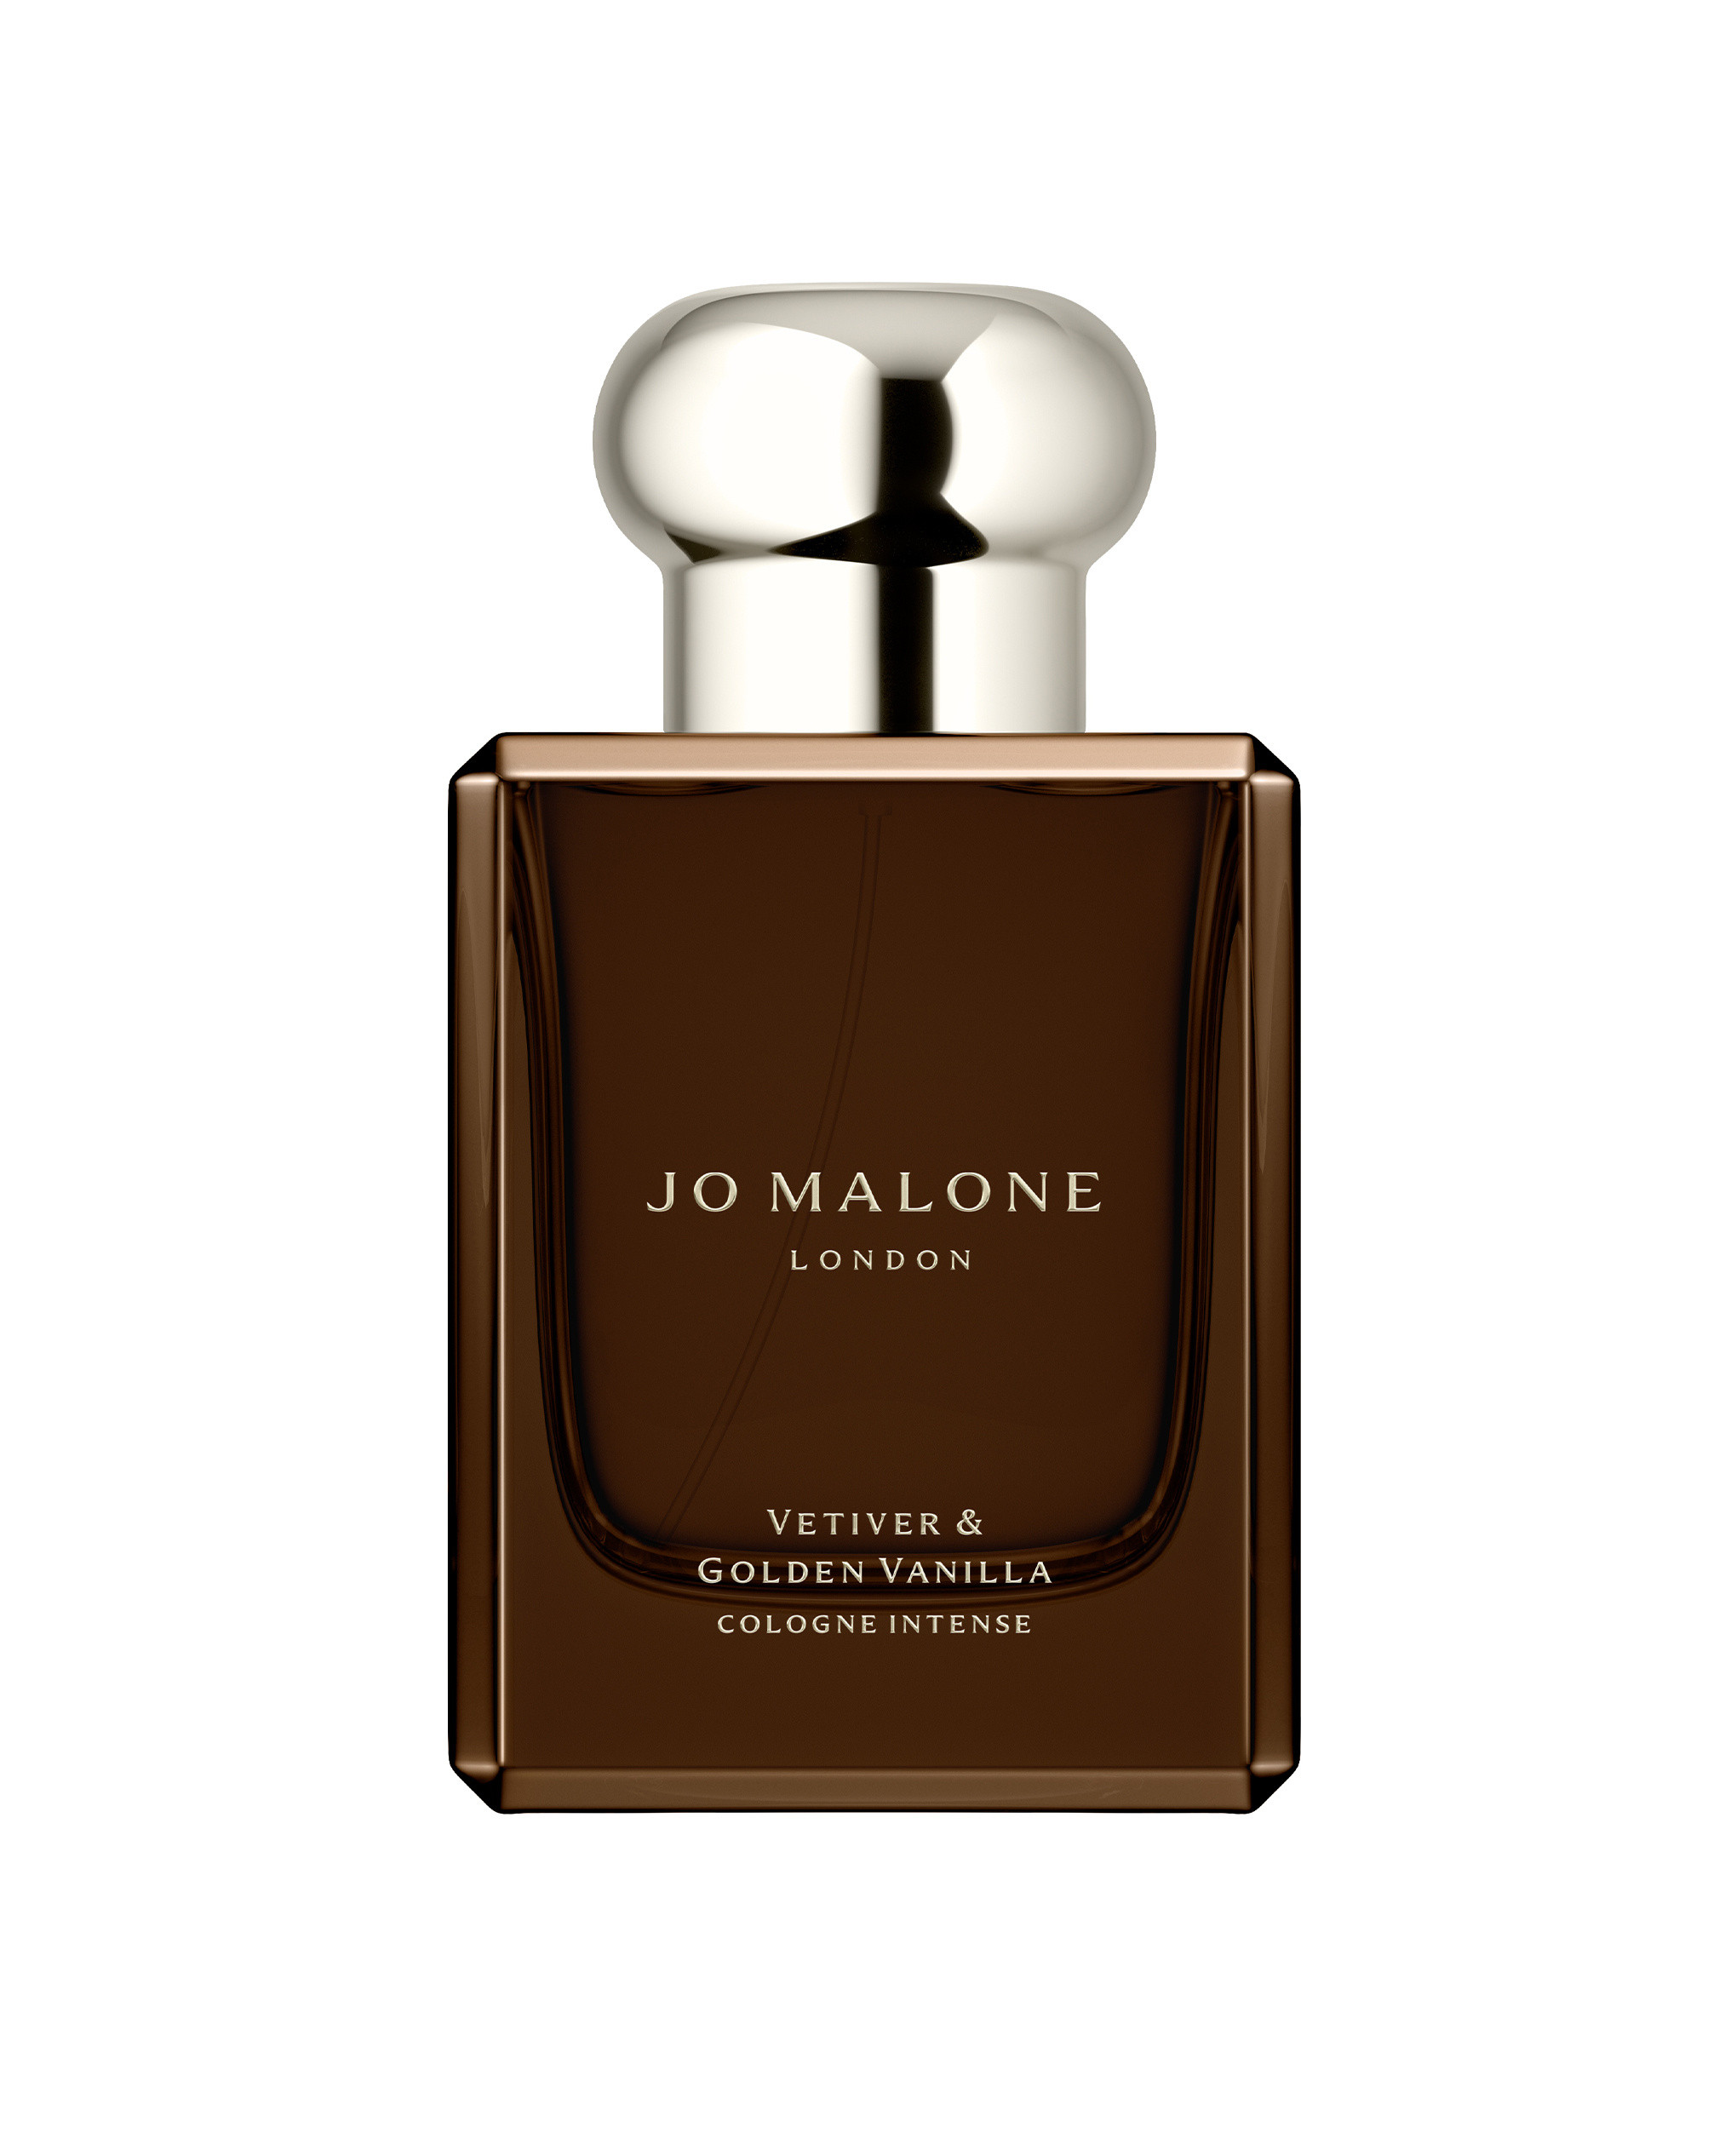 Jo Malone Vetiver & Golden Vanilla Cologne Intense 50 ml, Brown, large image number 0